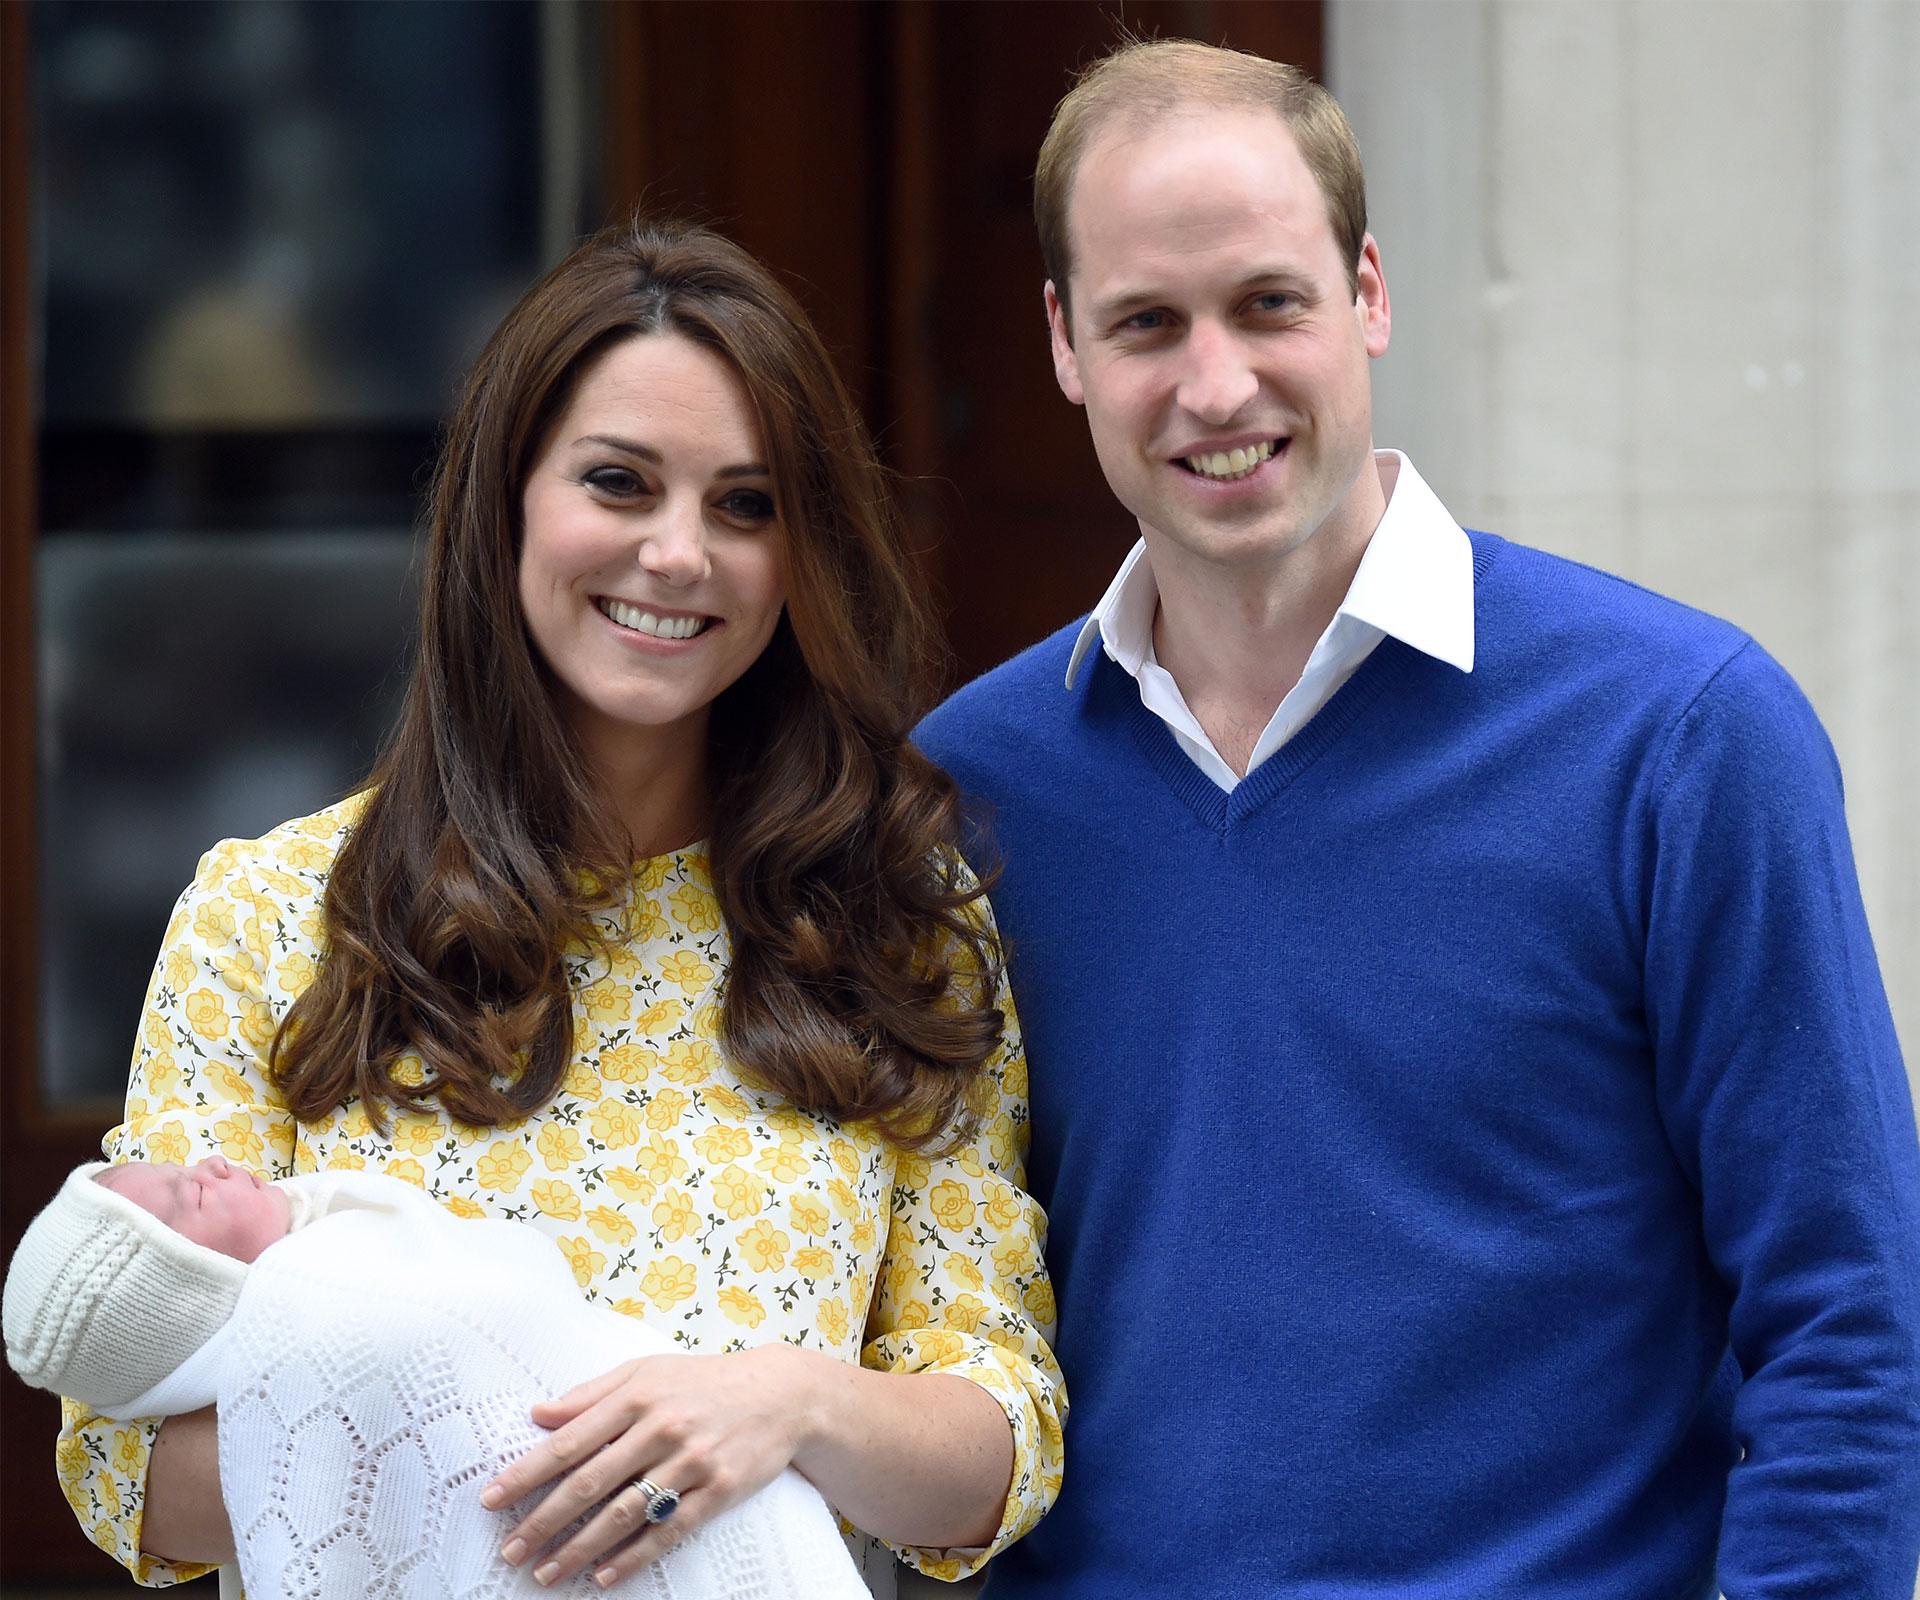 More details revealed for Princess Charlotte's christening